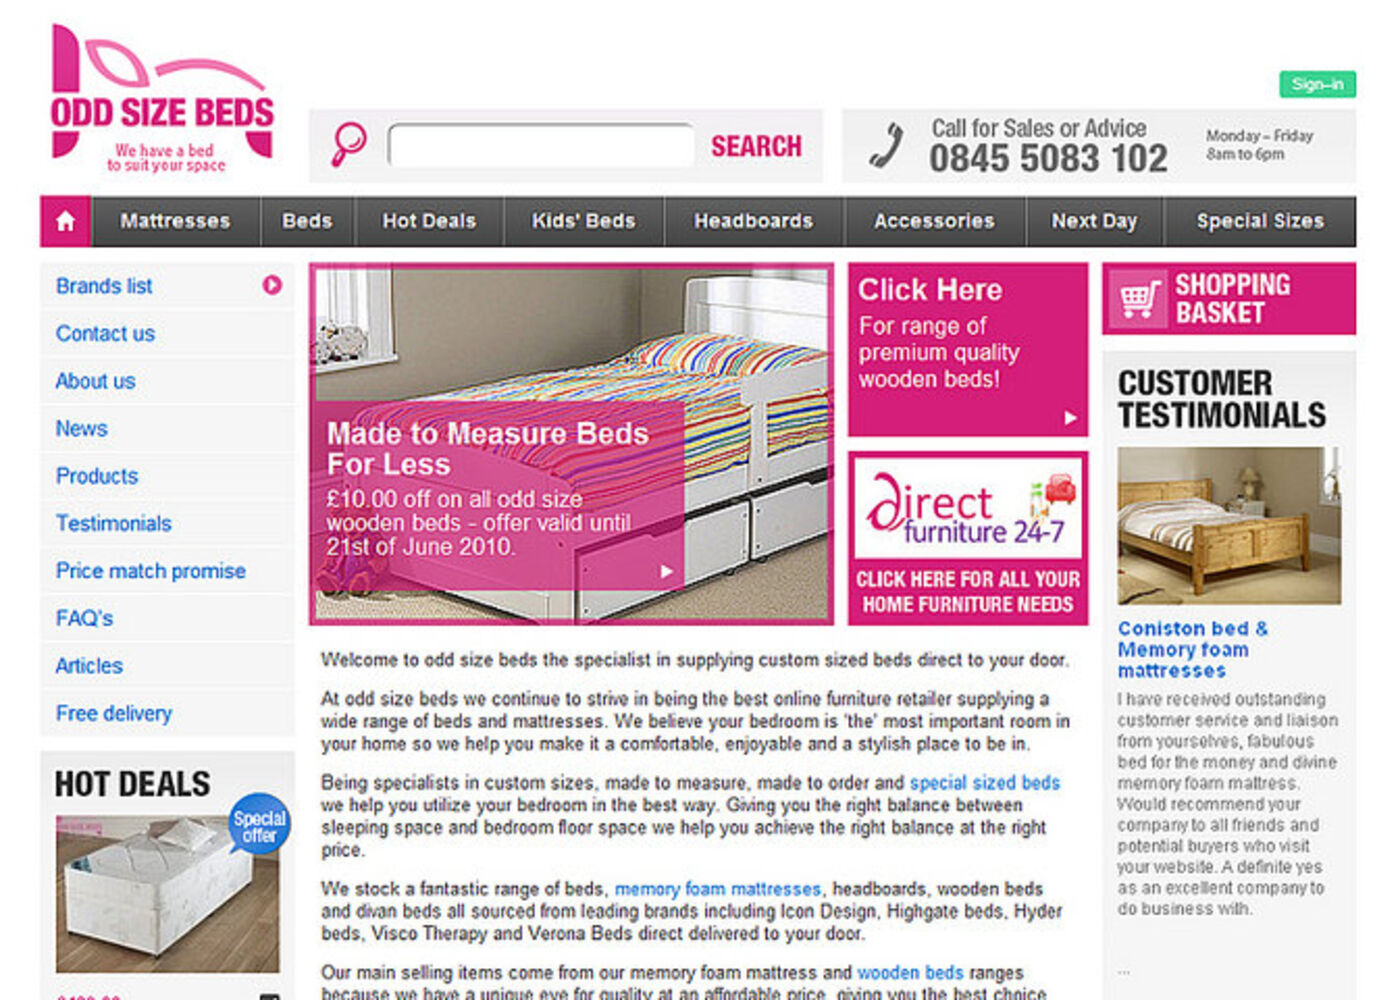 Odd Size Beds (2008) Homepage header